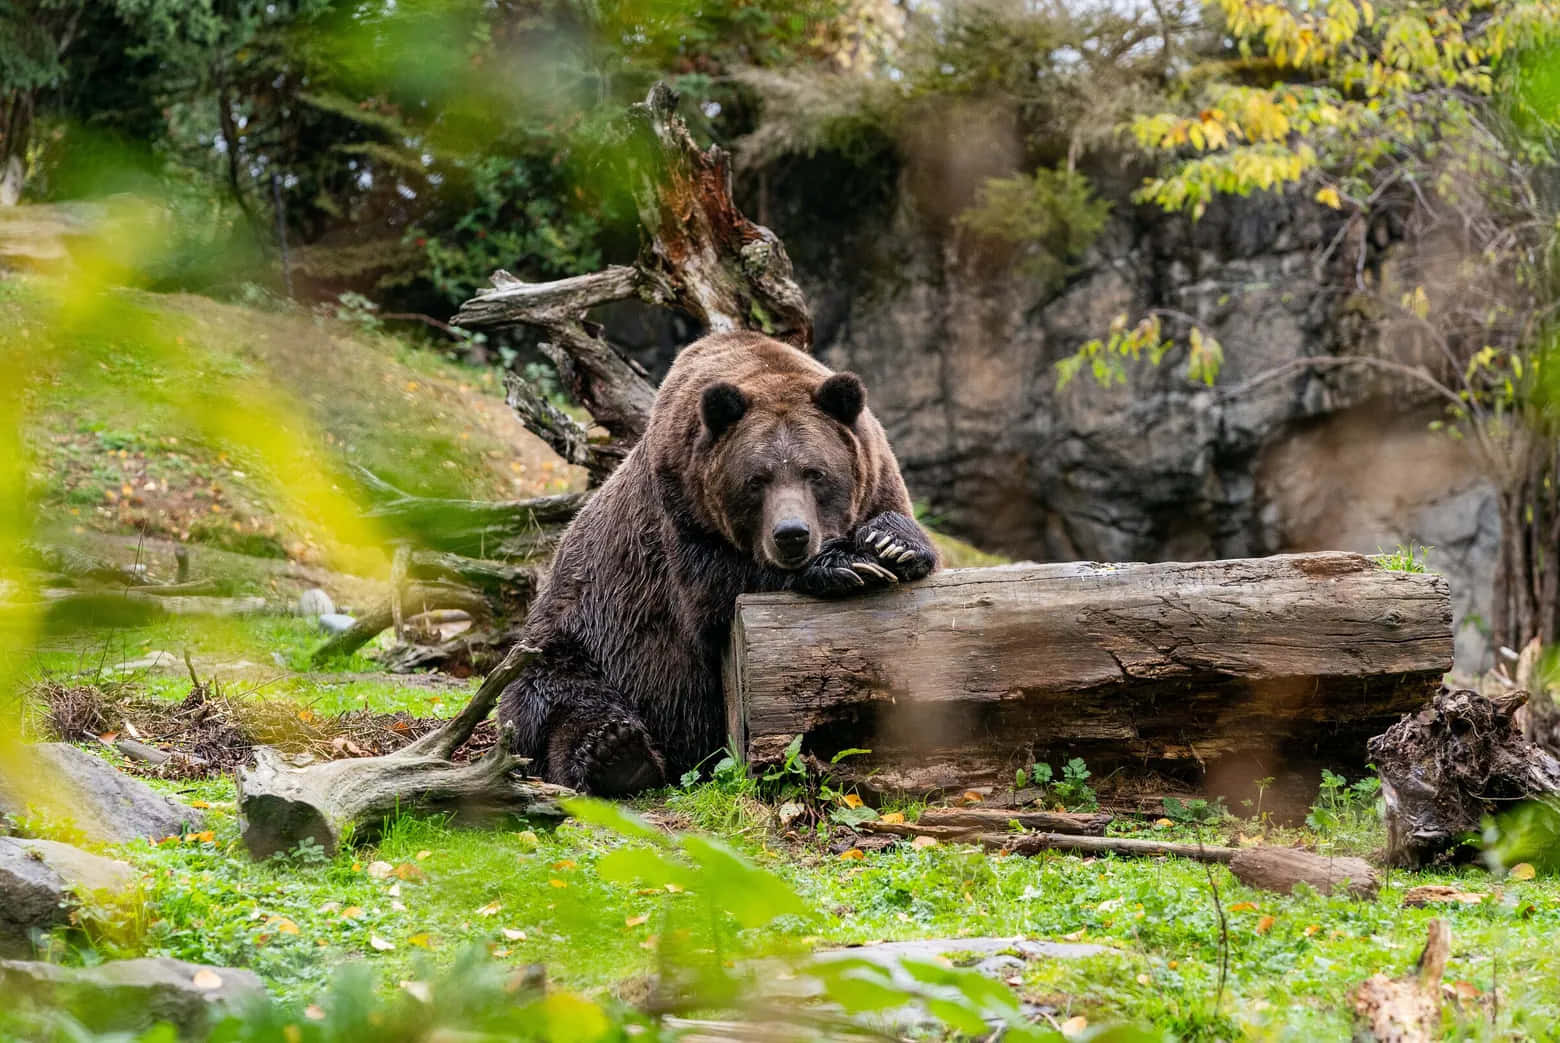 A grizzly bear enjoys a stroll through the wilderness